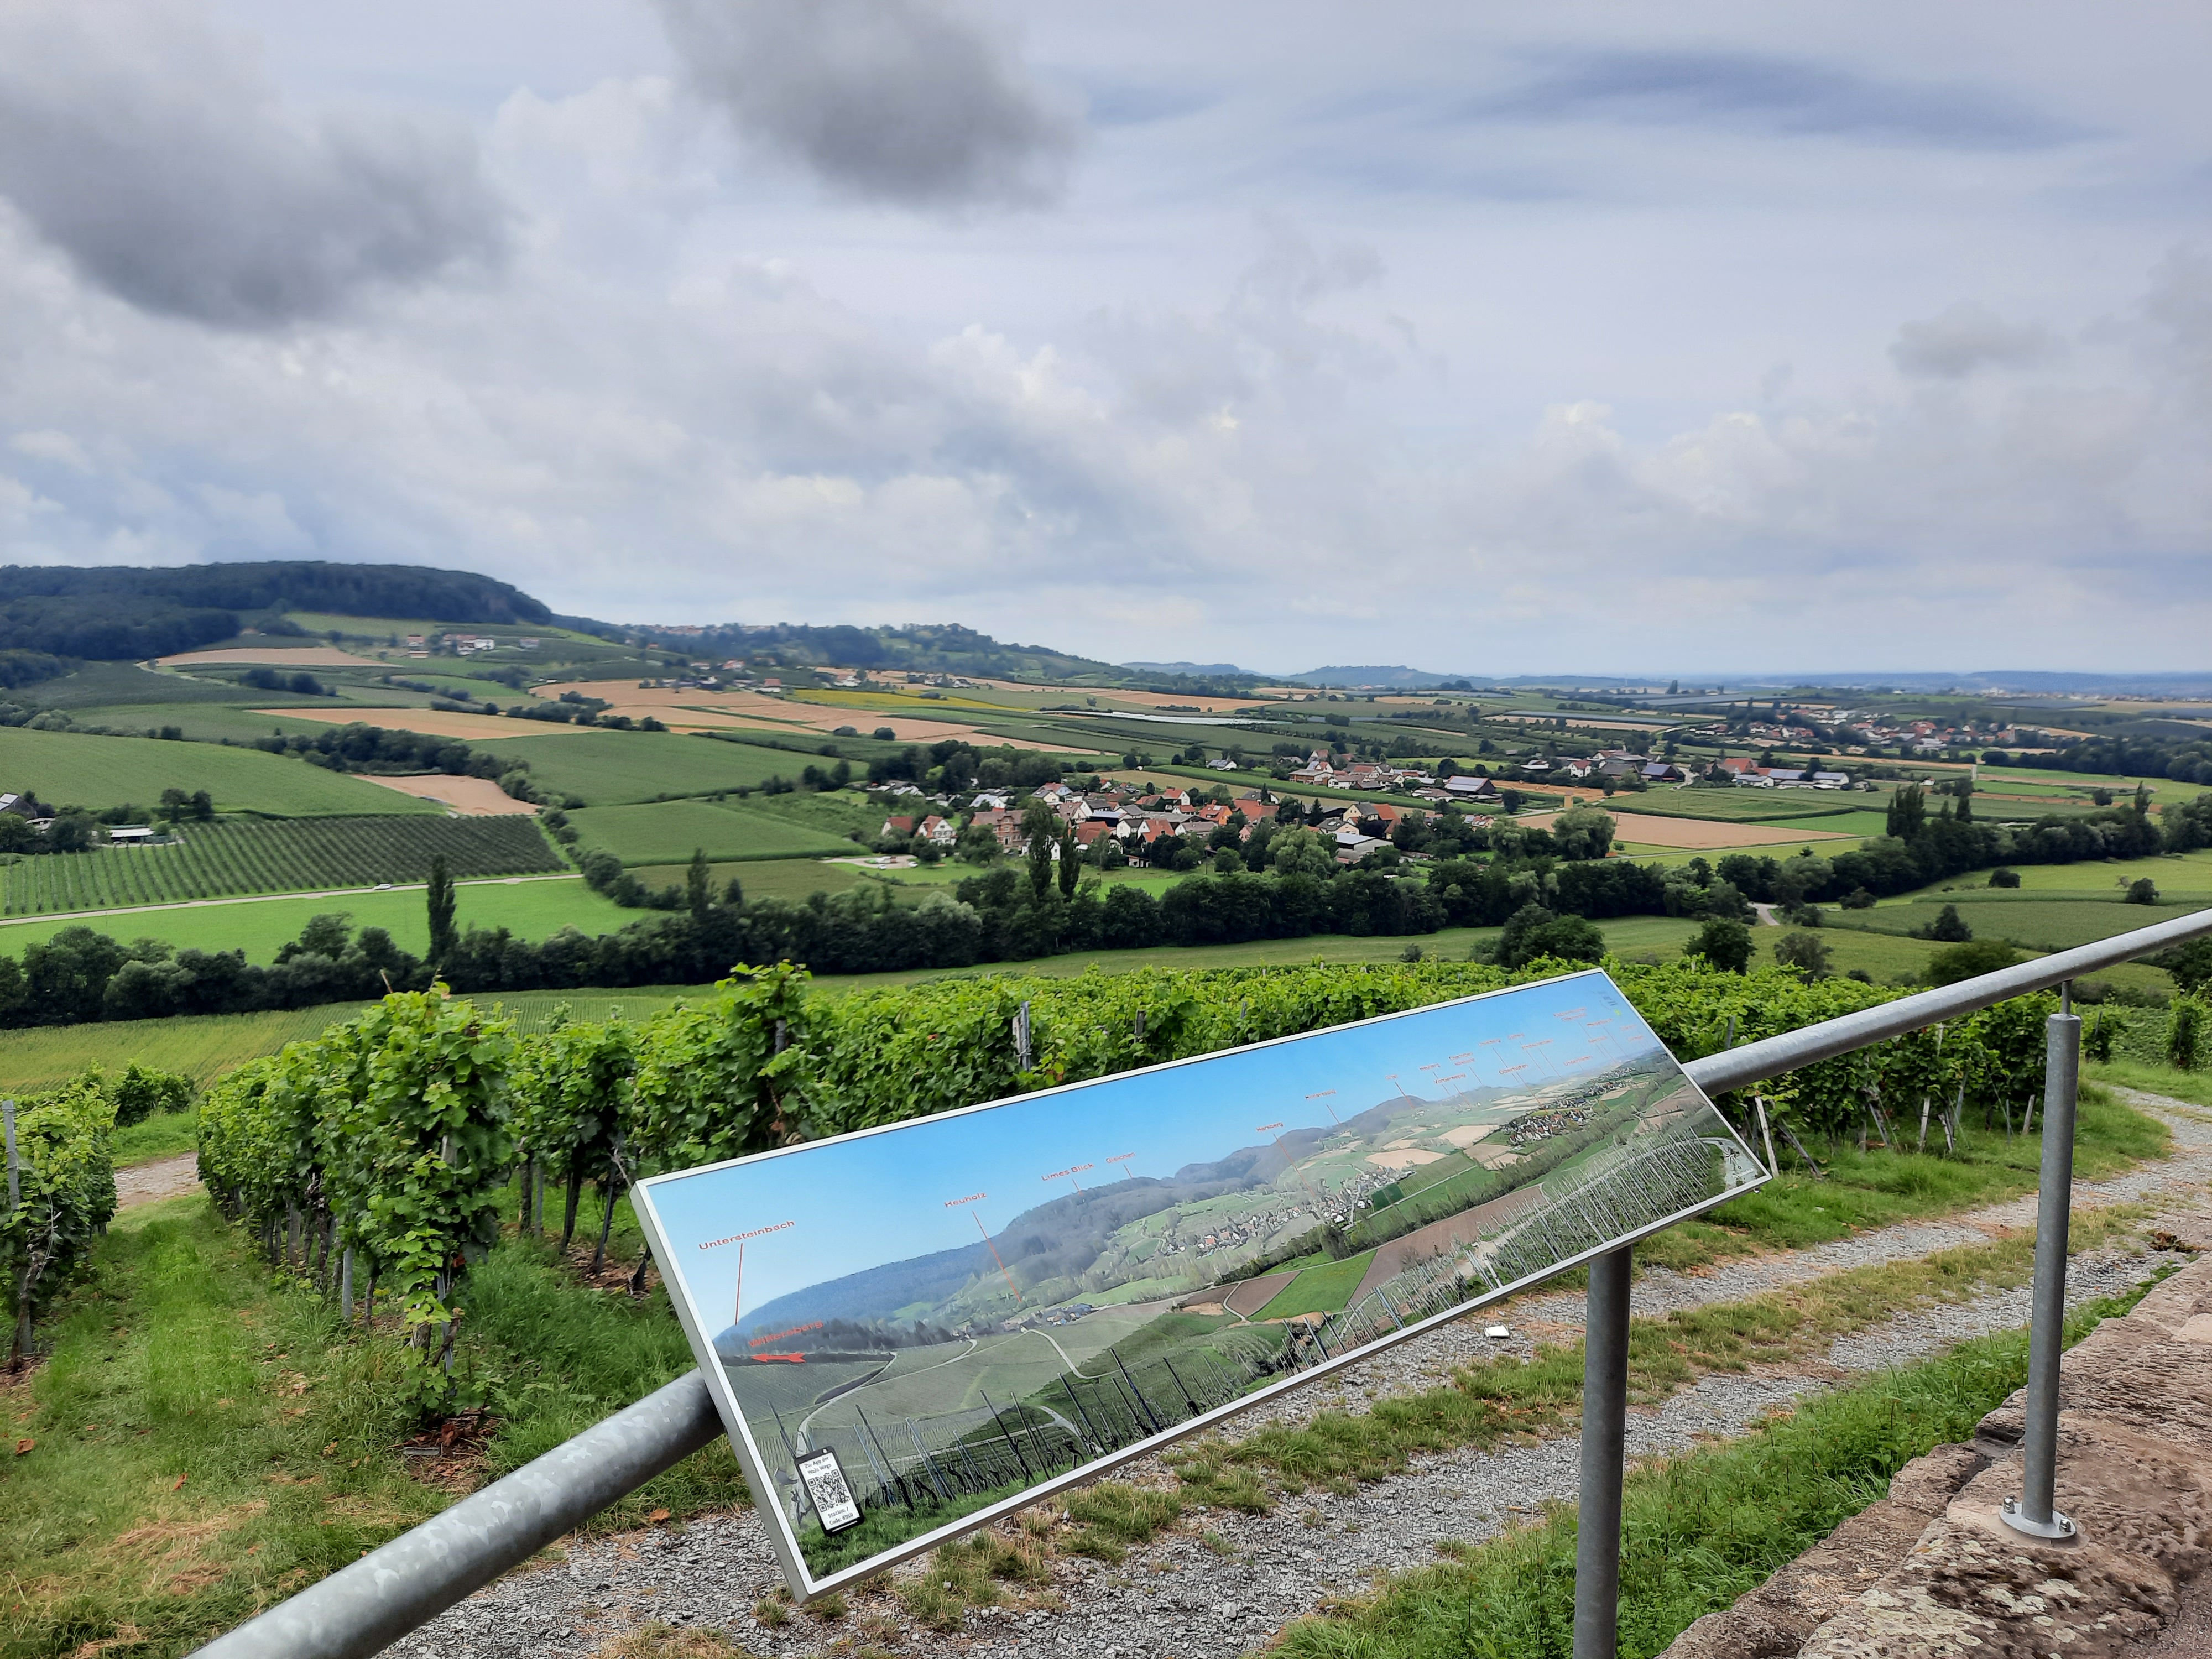                                                     Panoramatafel am Ranzenberg                                    